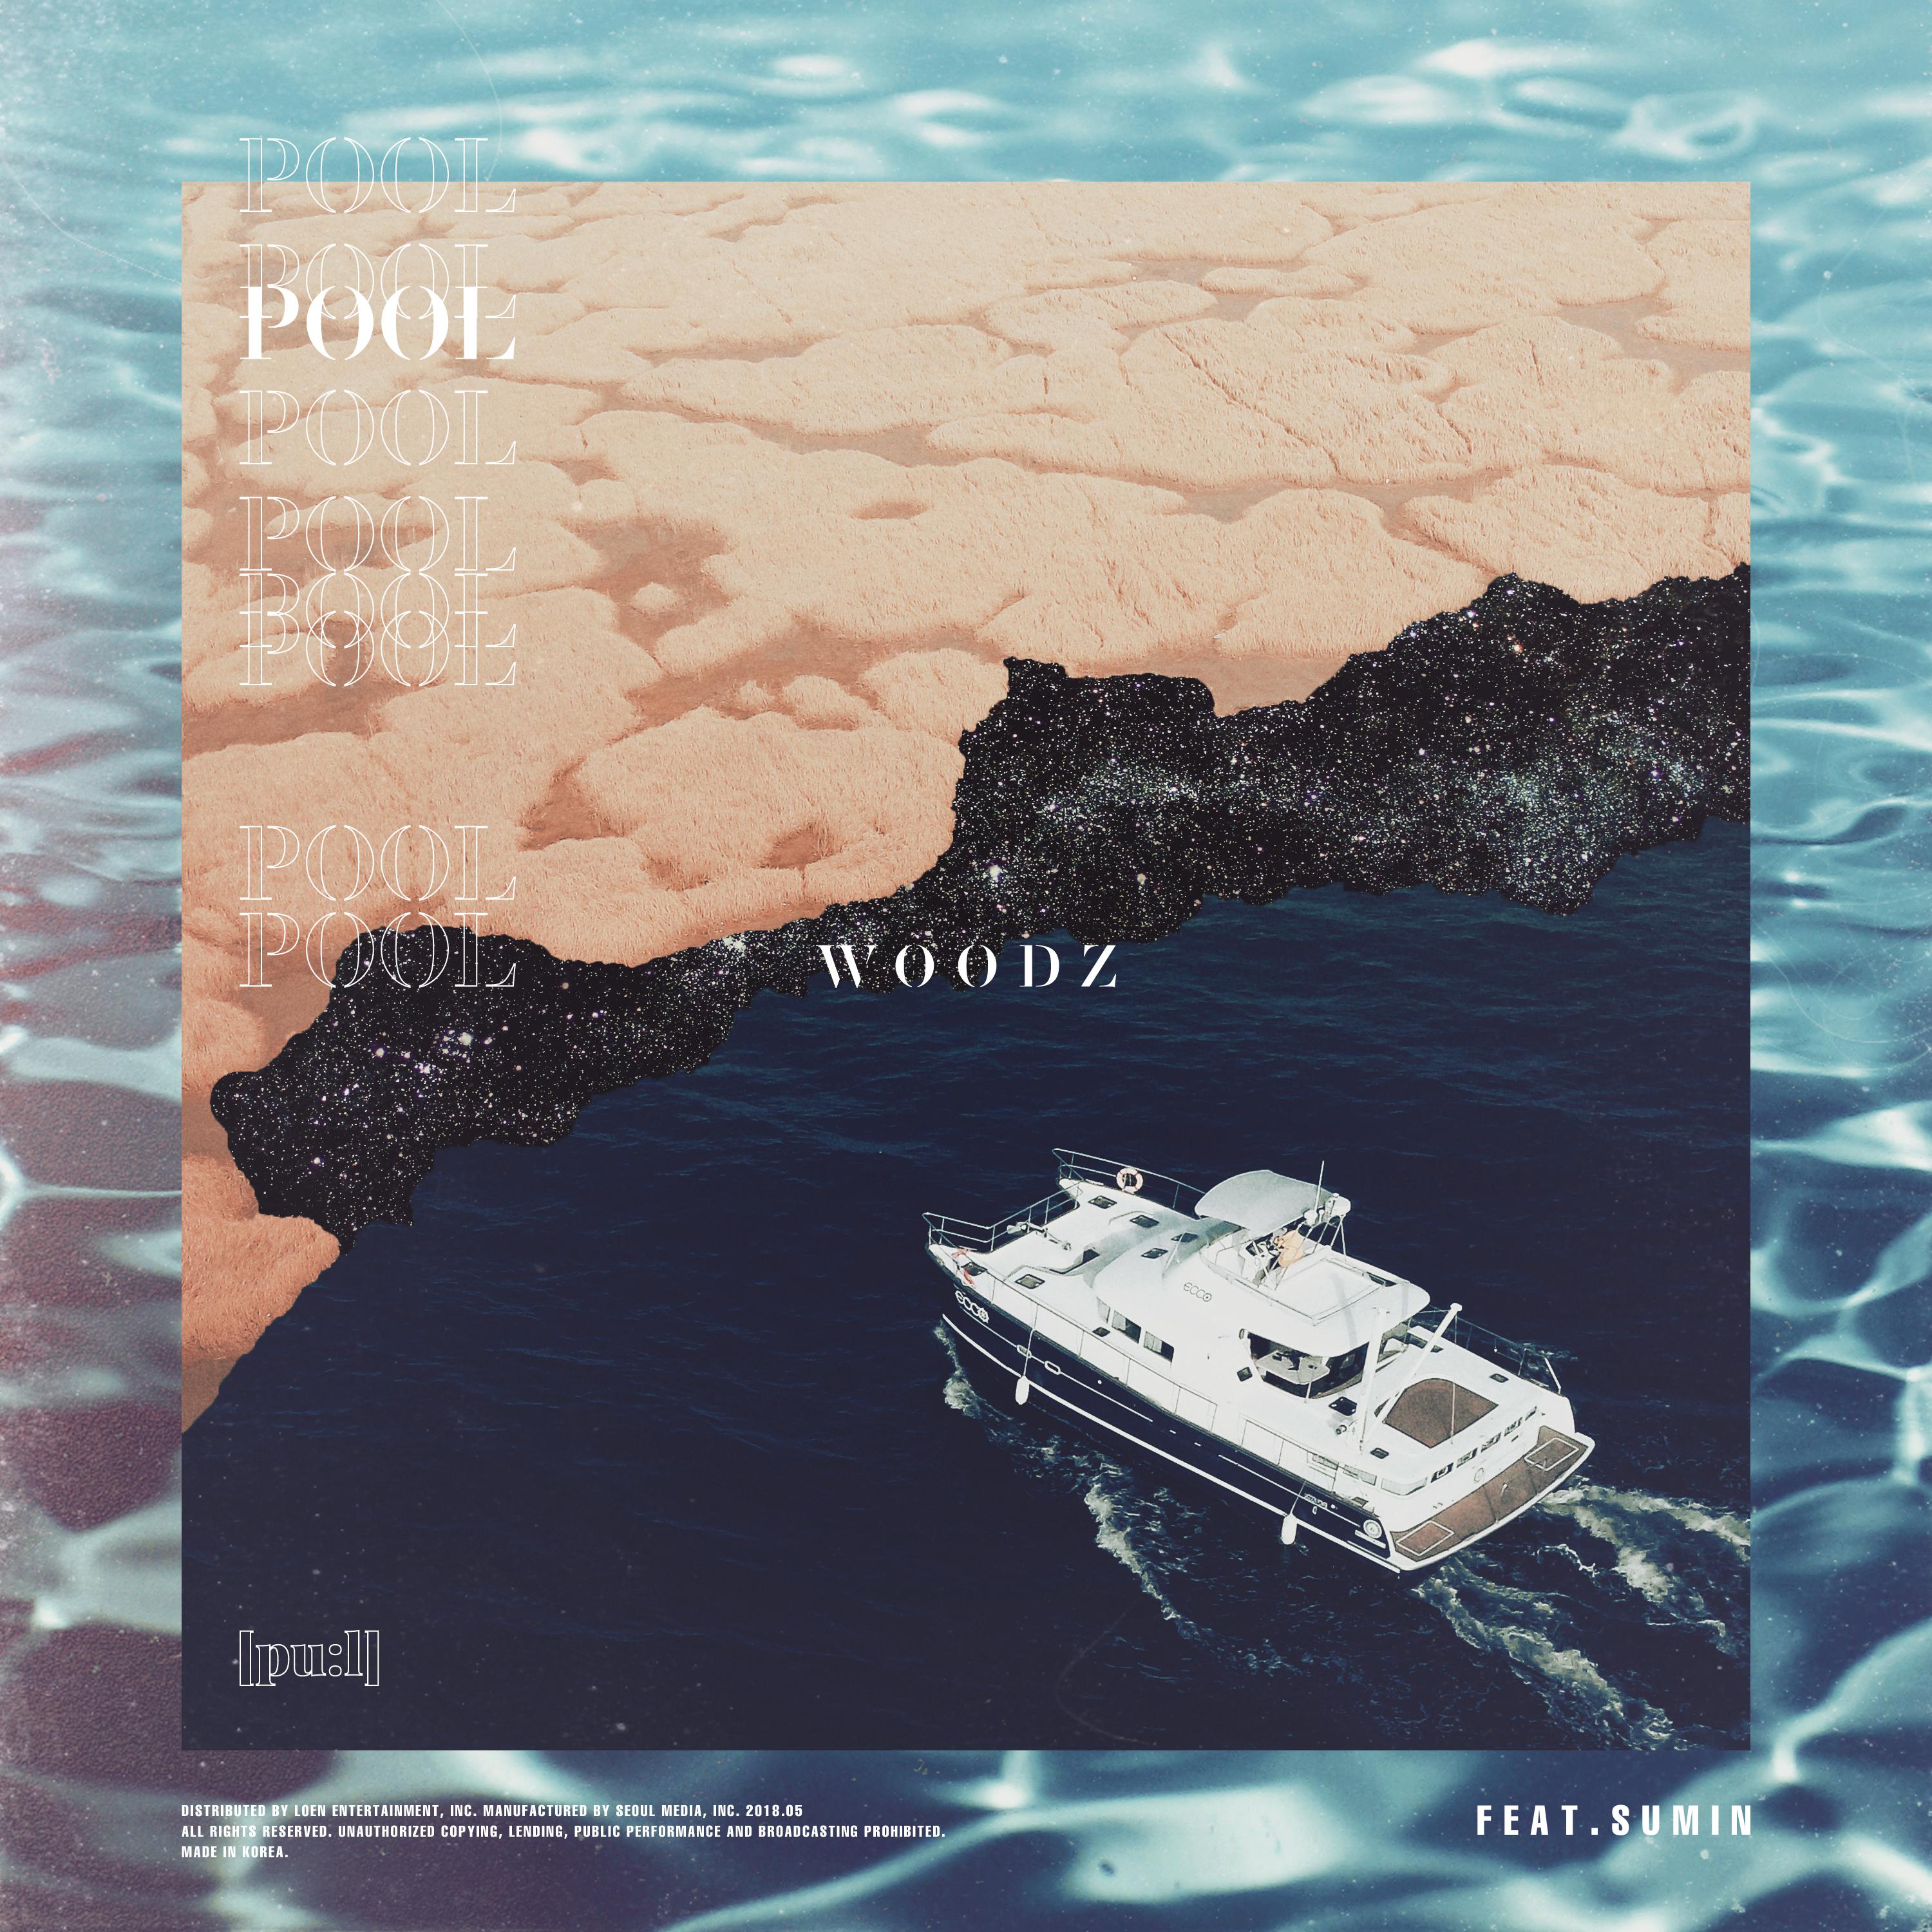 POOL歌词 歌手WOODZ / SUMIN-专辑POOL[pu:l]-单曲《POOL》LRC歌词下载